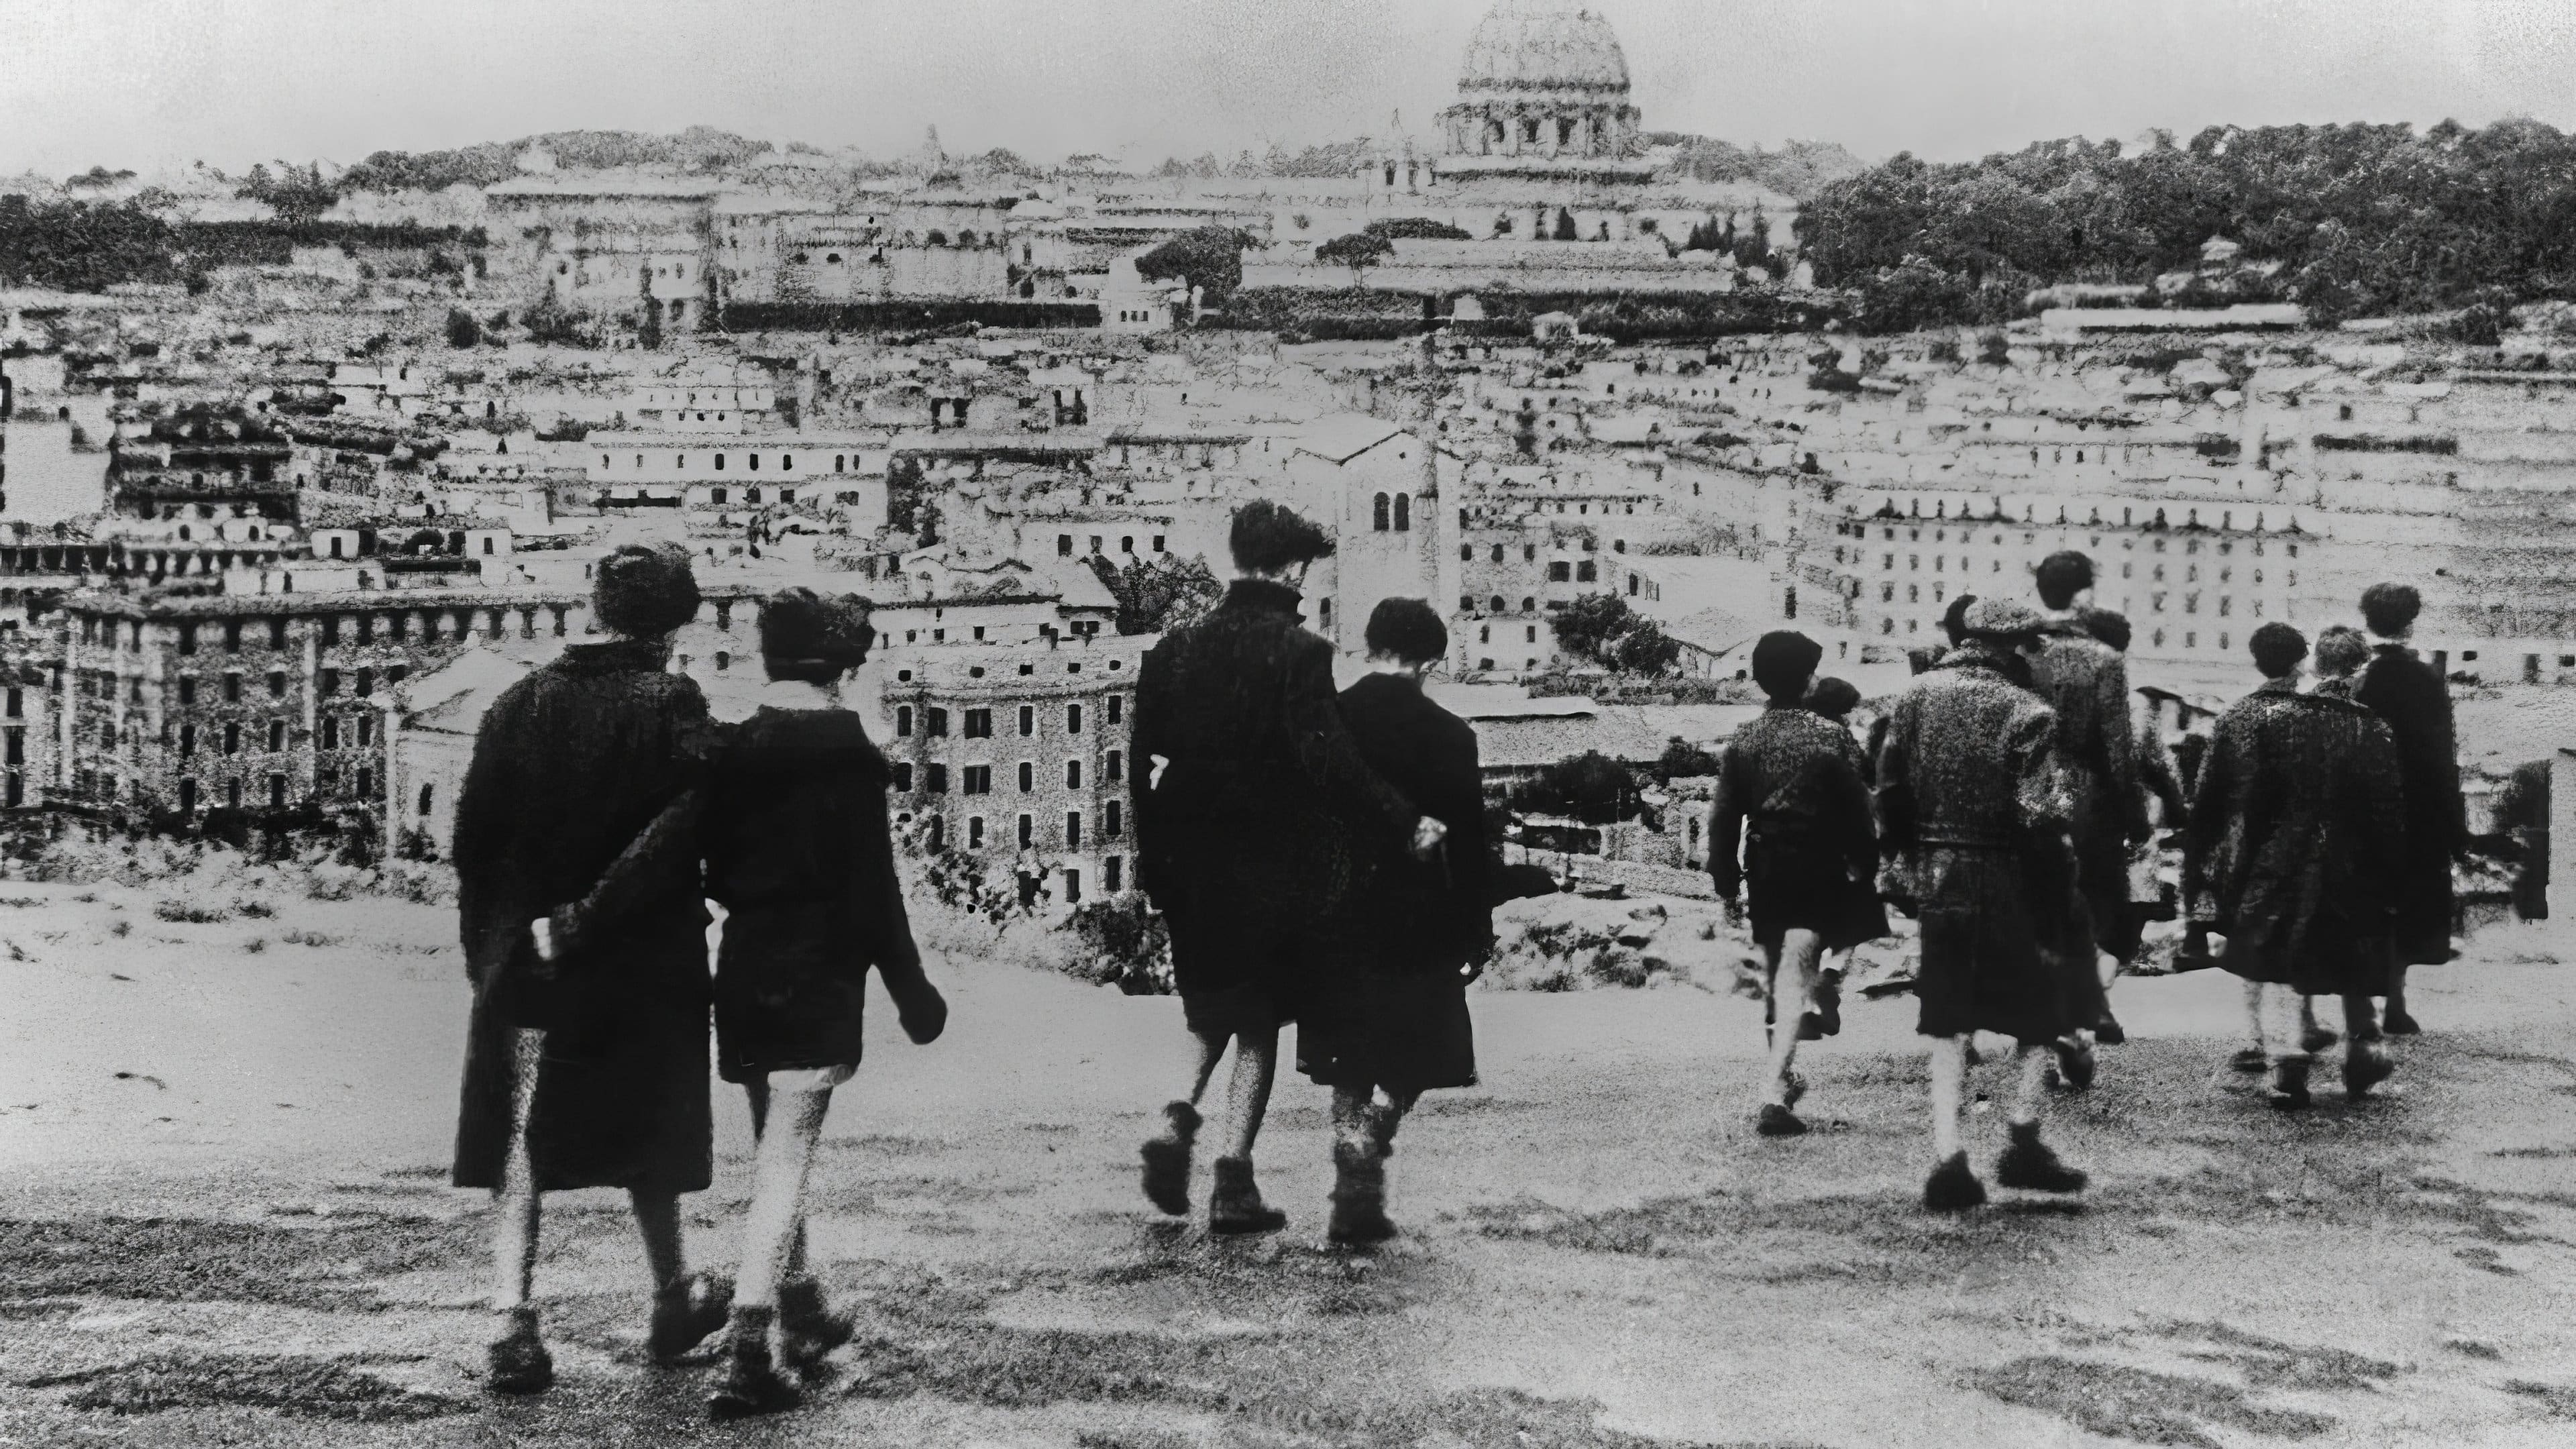 Roma città aperta (1945)